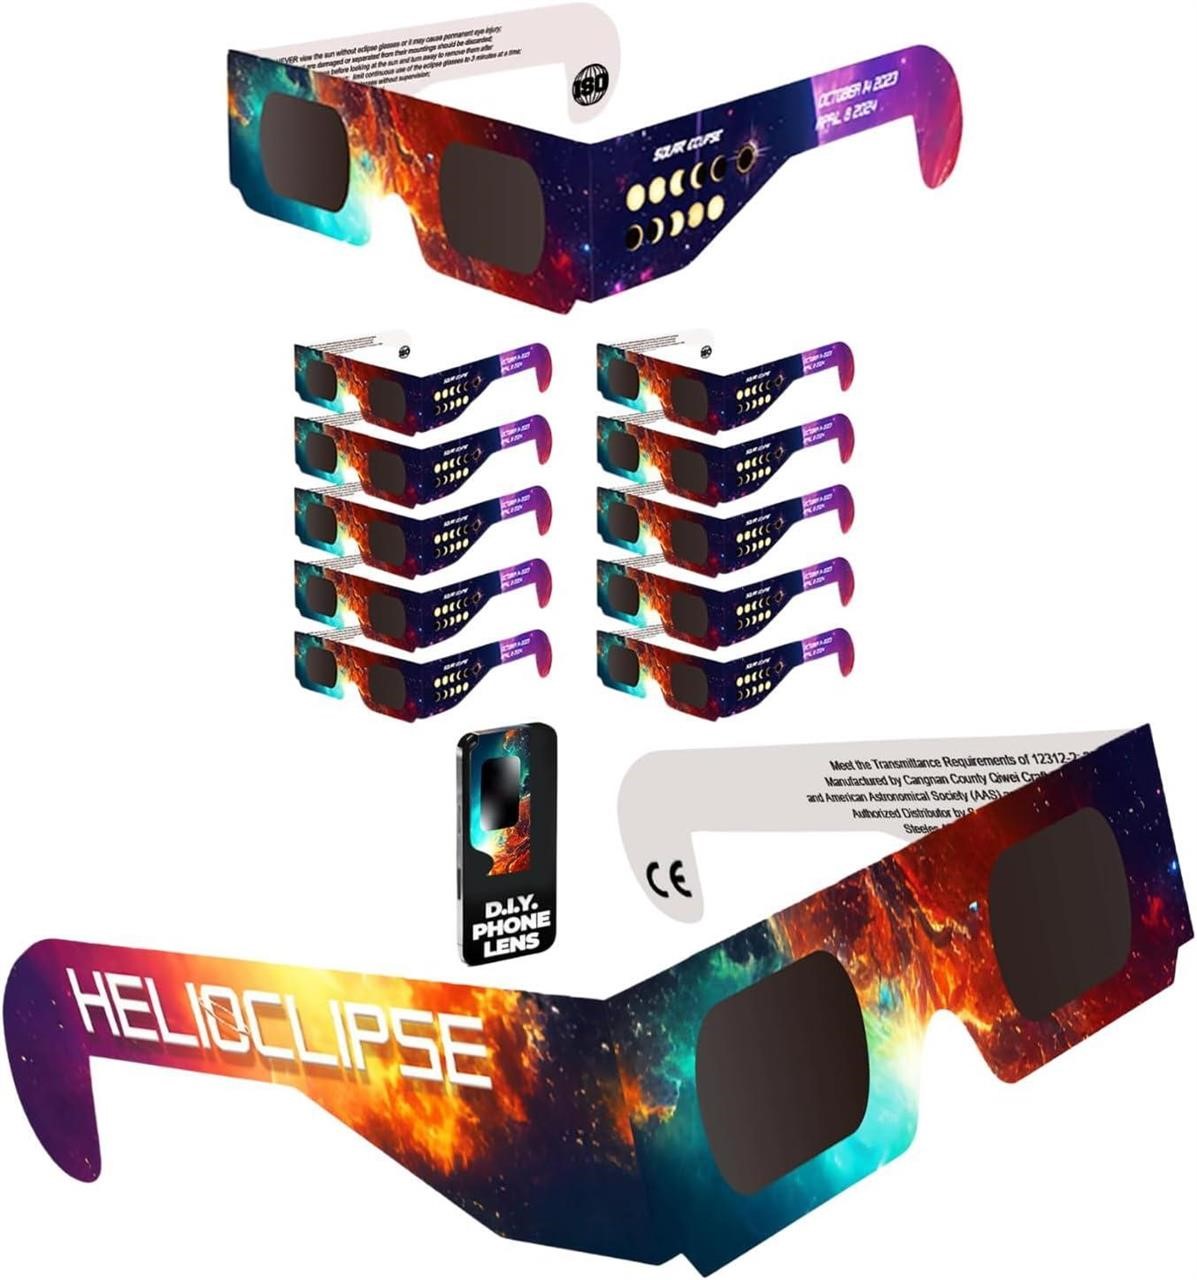 Helioclipse 12pk Solar Eclipse Glasses.x2